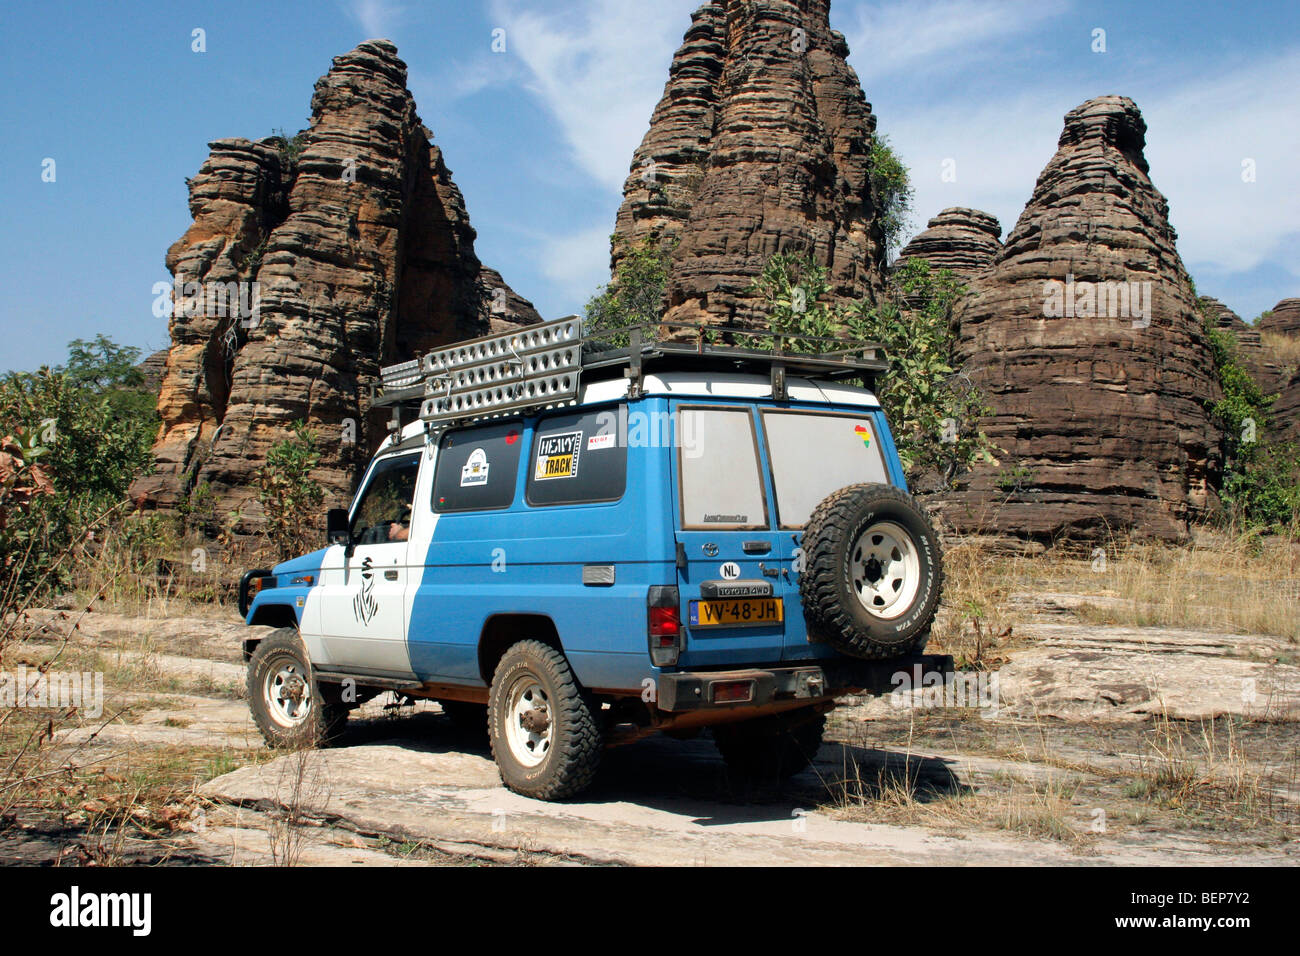 Four-wheel drive vehicle and the sandstone rock formations called Dômes de Fabédougou near Banfora, Burkina Faso, West Africa Stock Photo